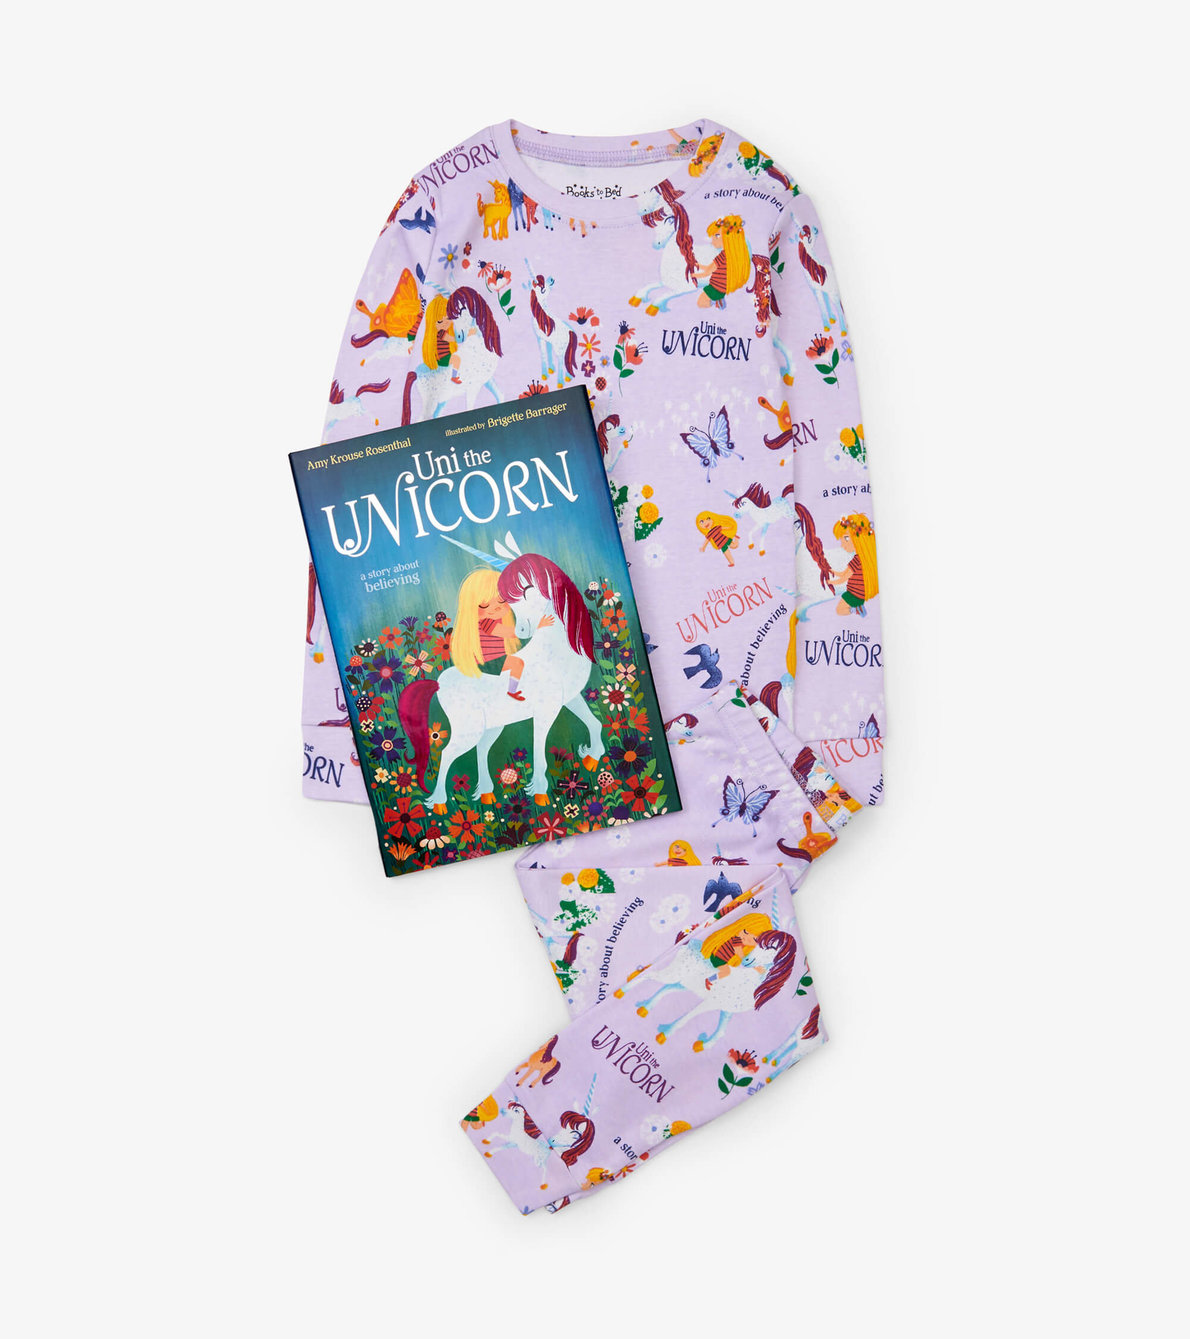 View larger image of Uni the Unicorn Book and Pajama Set